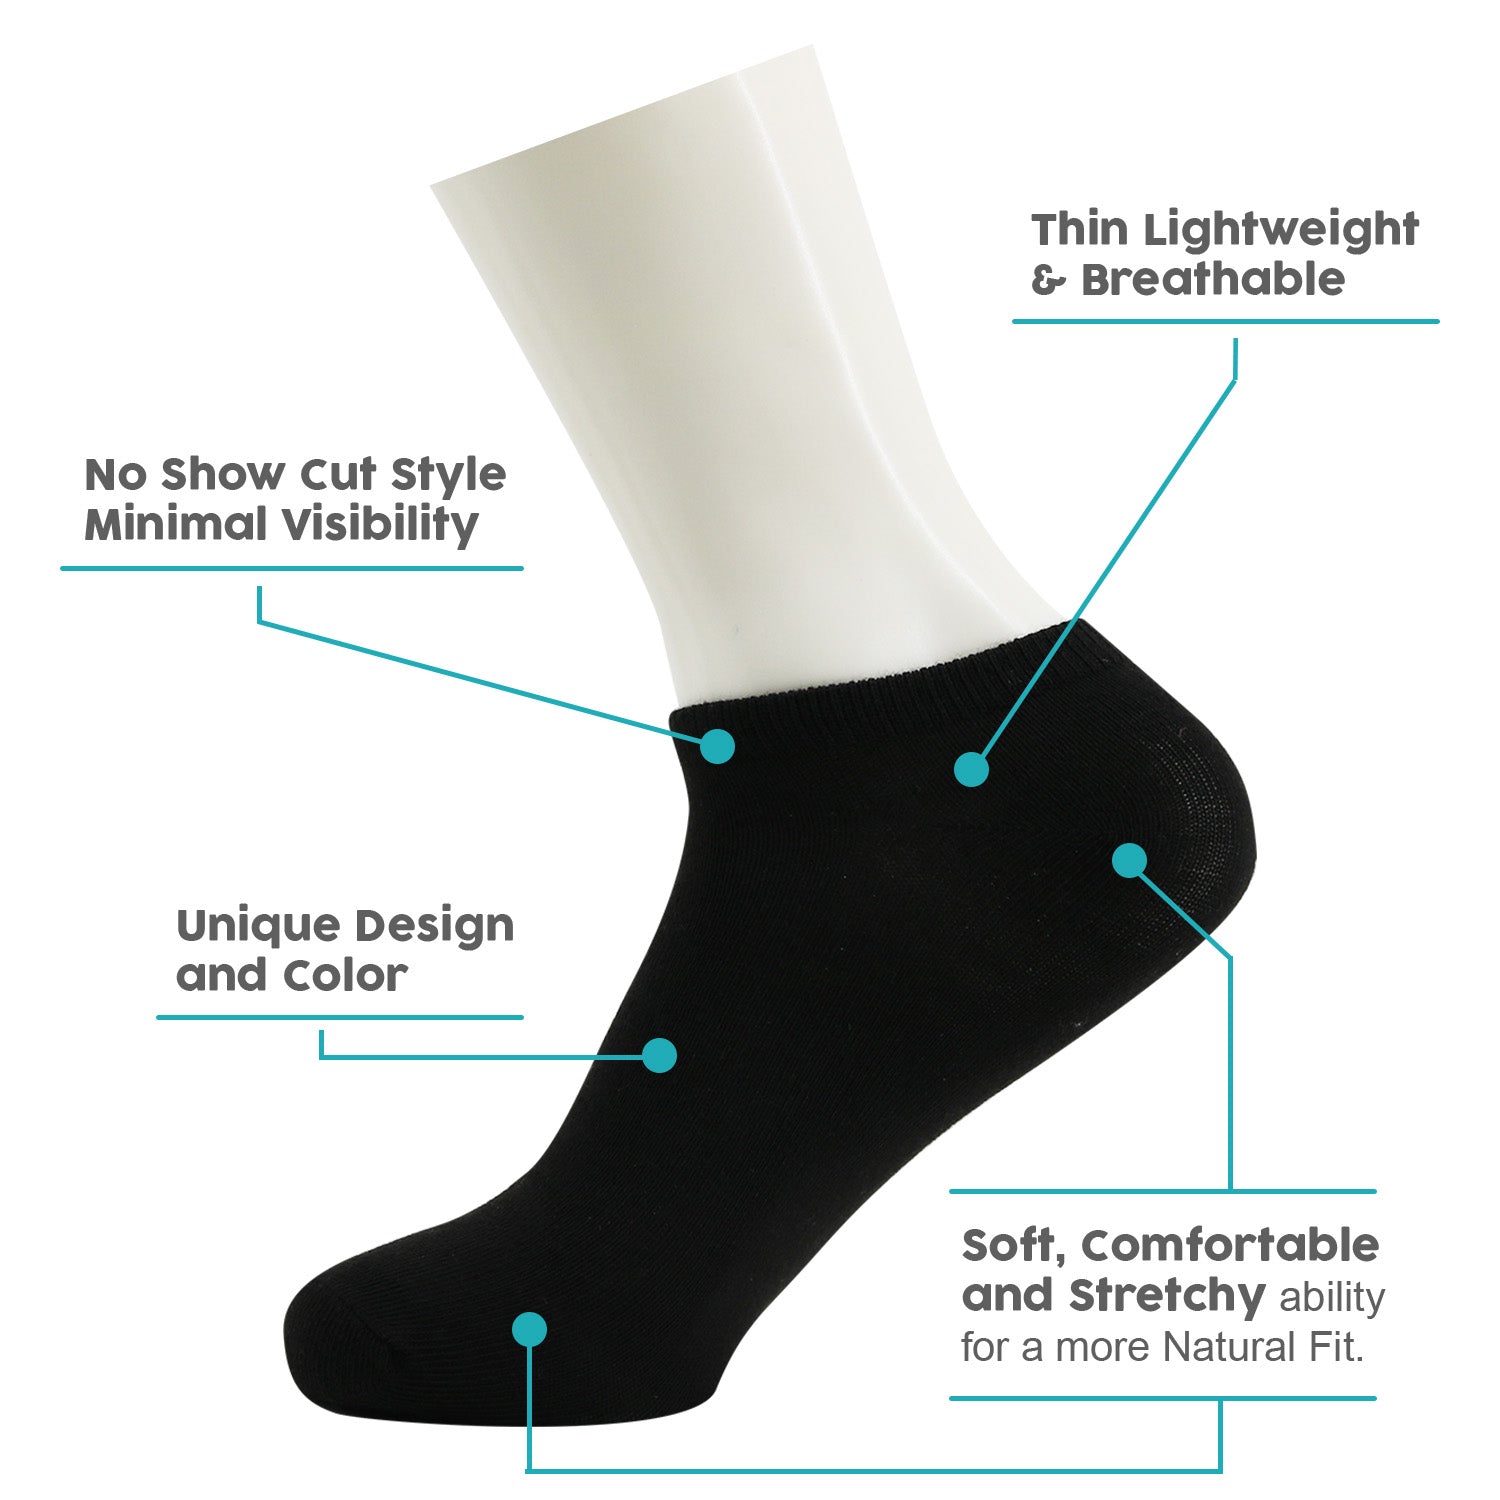 Women's No Show Wholesale Socks, Size 6-8 in Black - Bulk Case of 96 Pairs